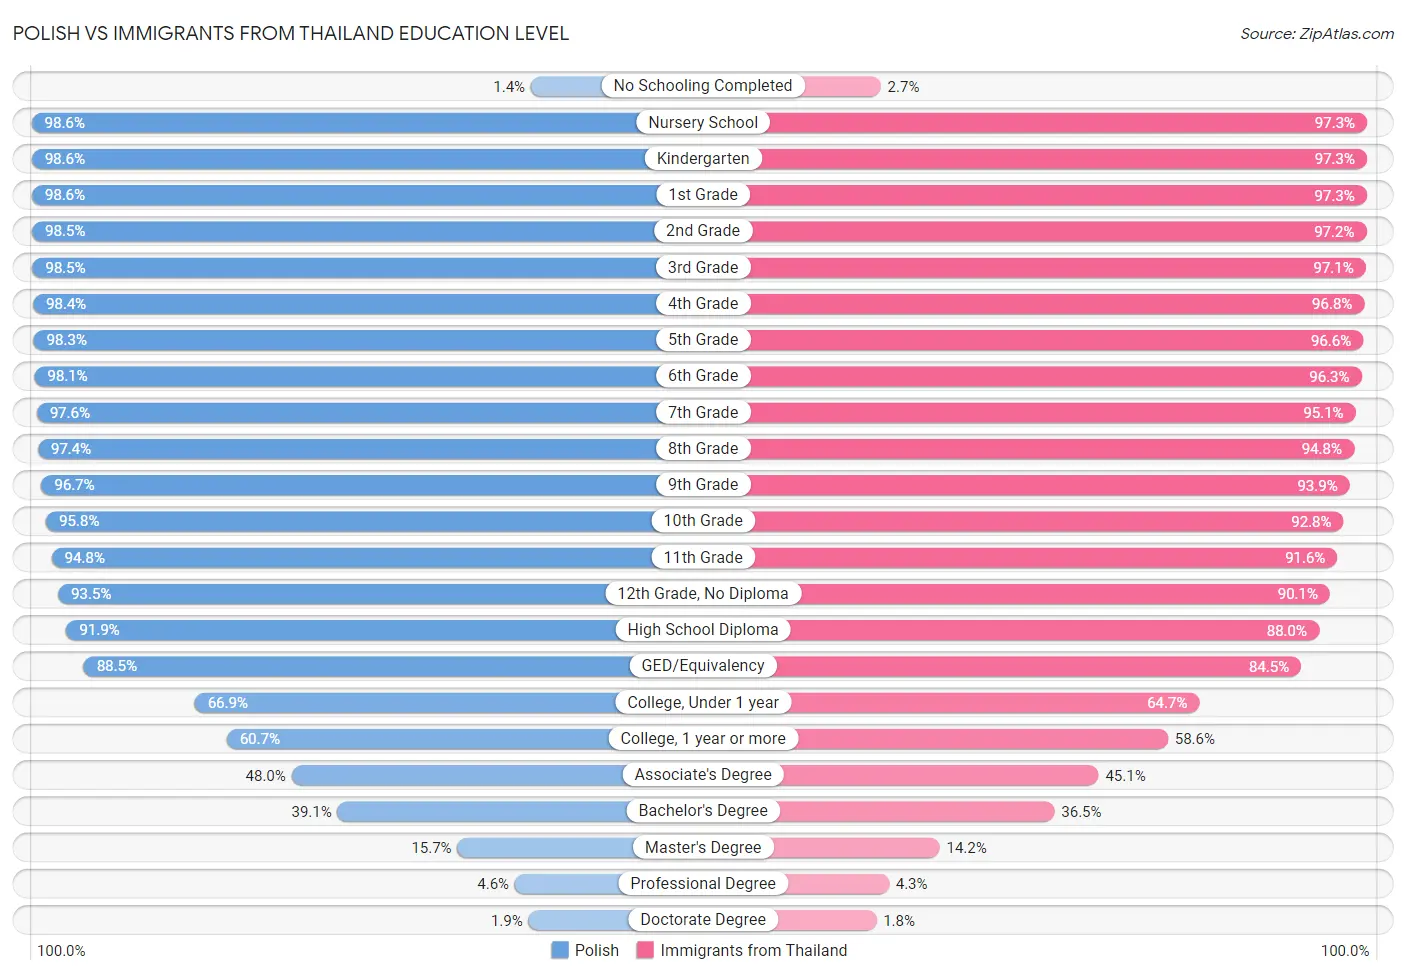 Polish vs Immigrants from Thailand Education Level